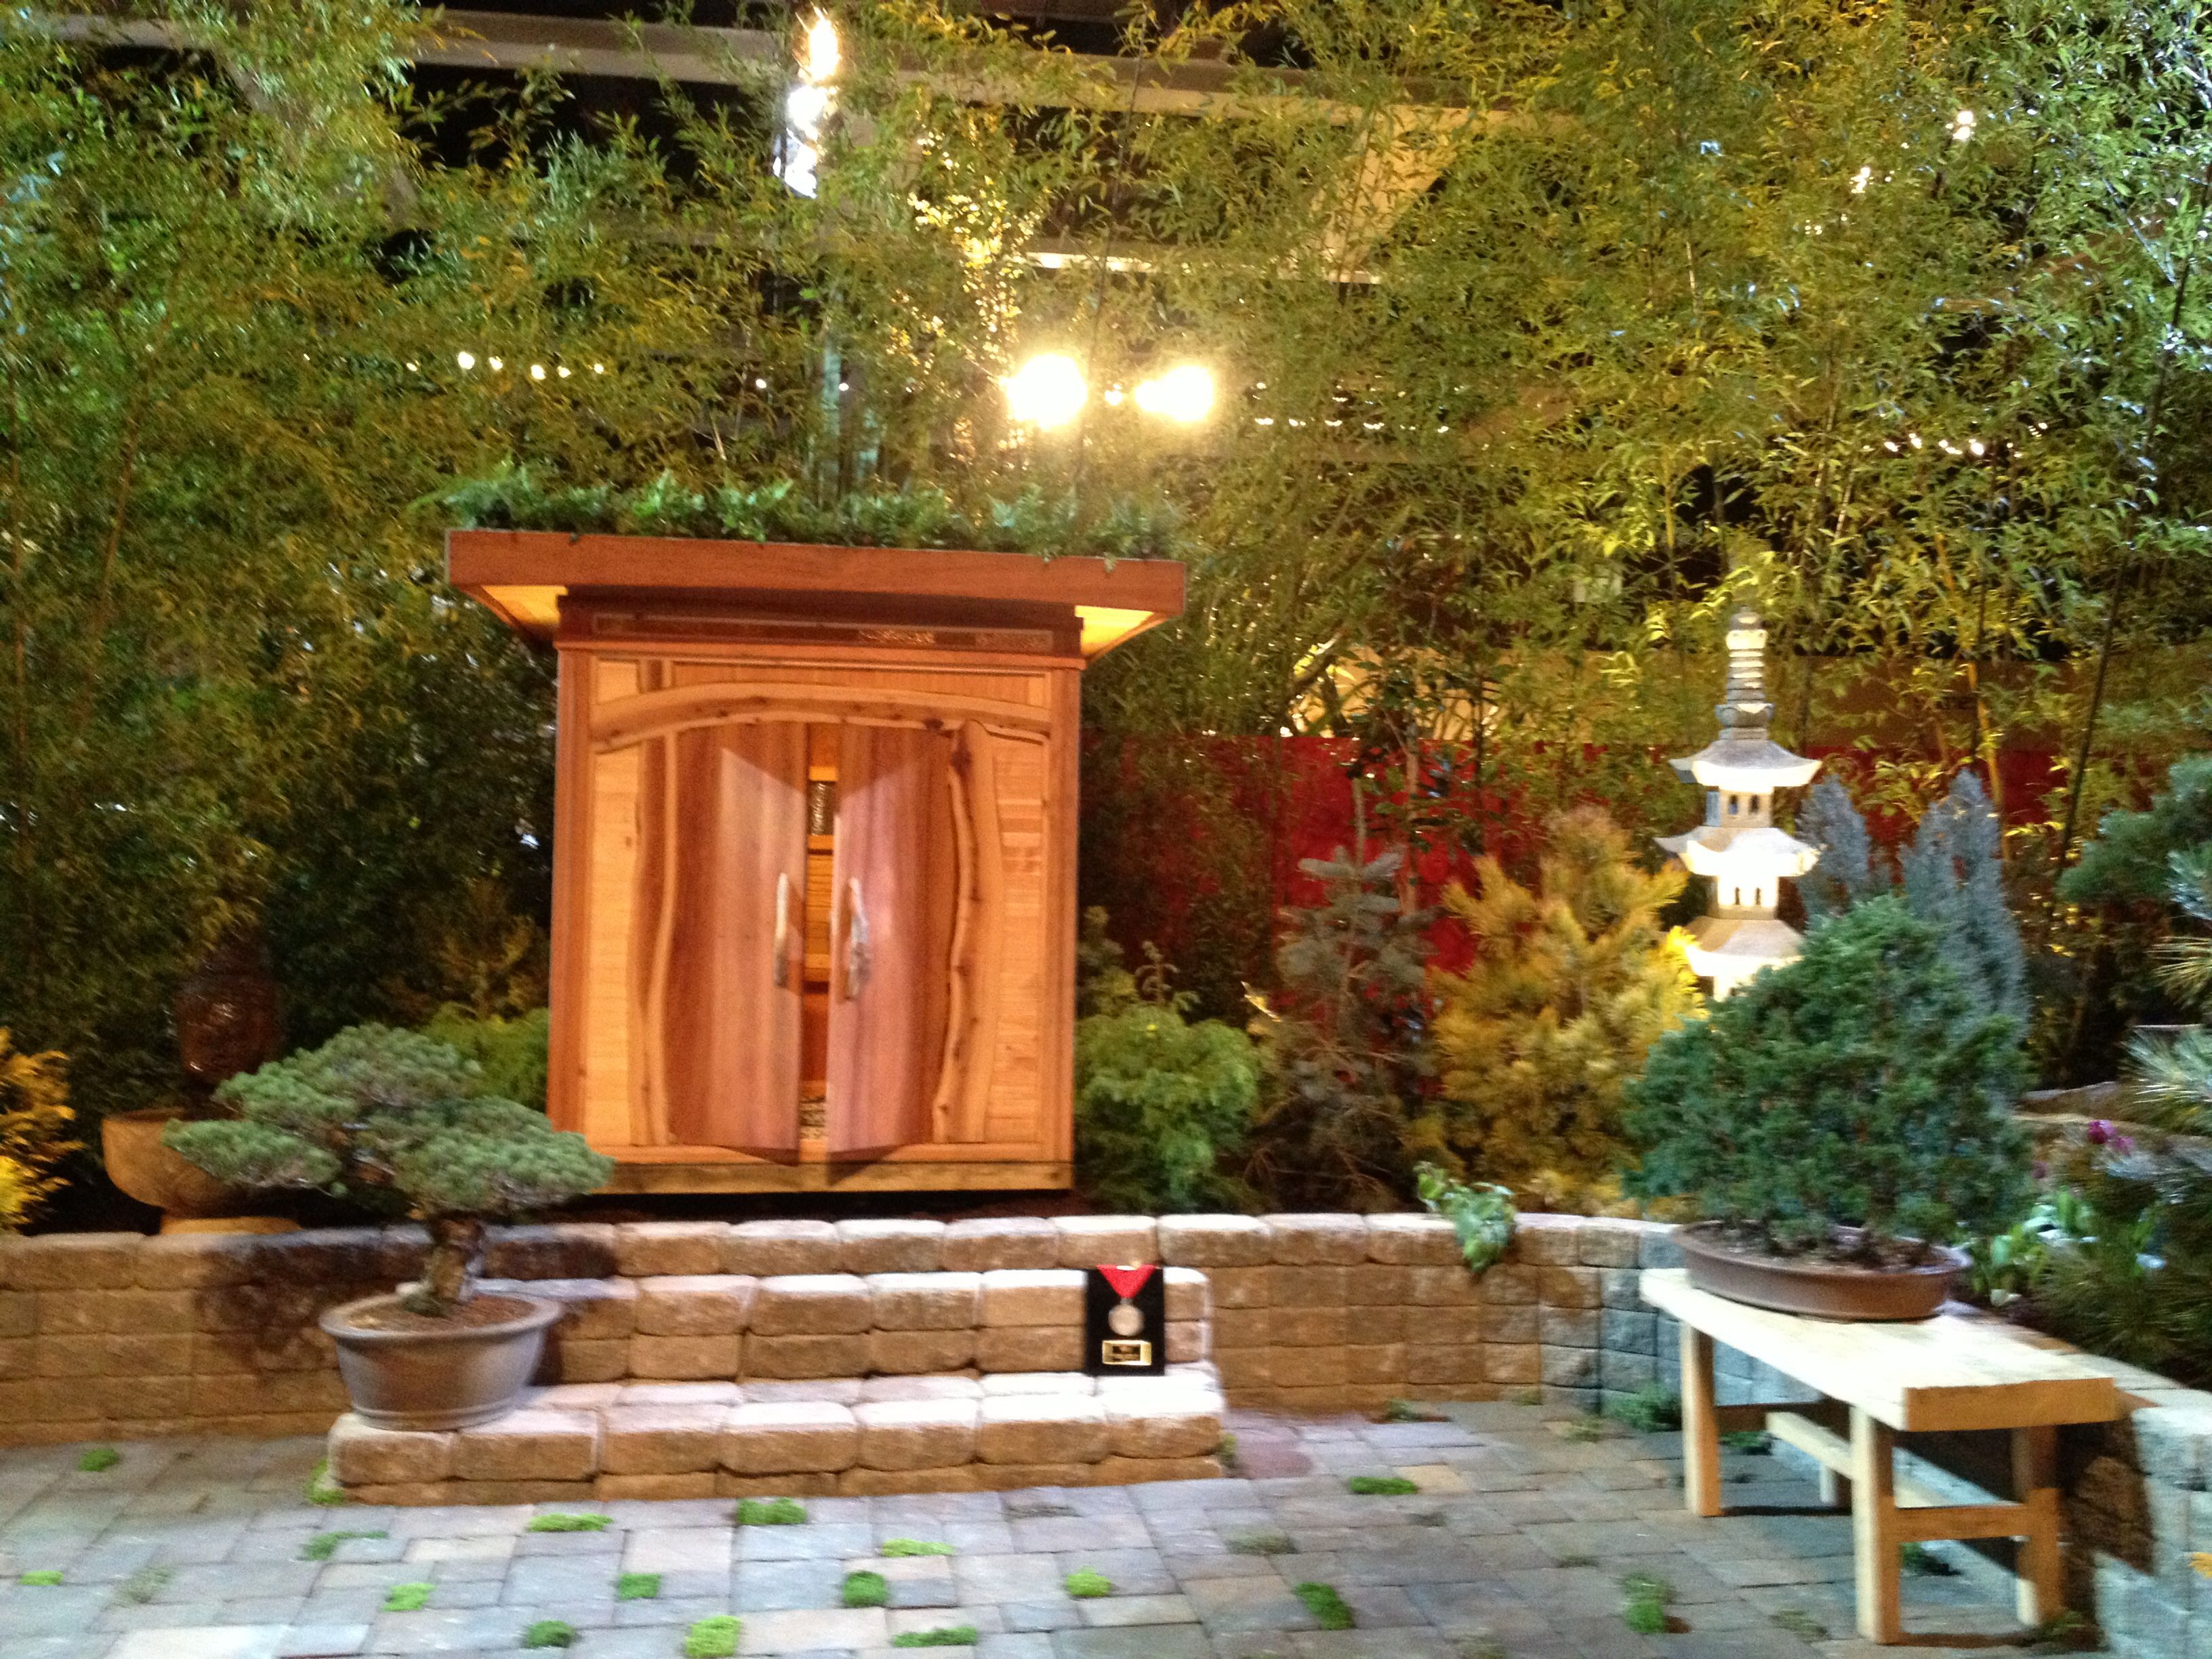 Meditation hut in garden setting | Gardens and Art | Pinterest | Gardens